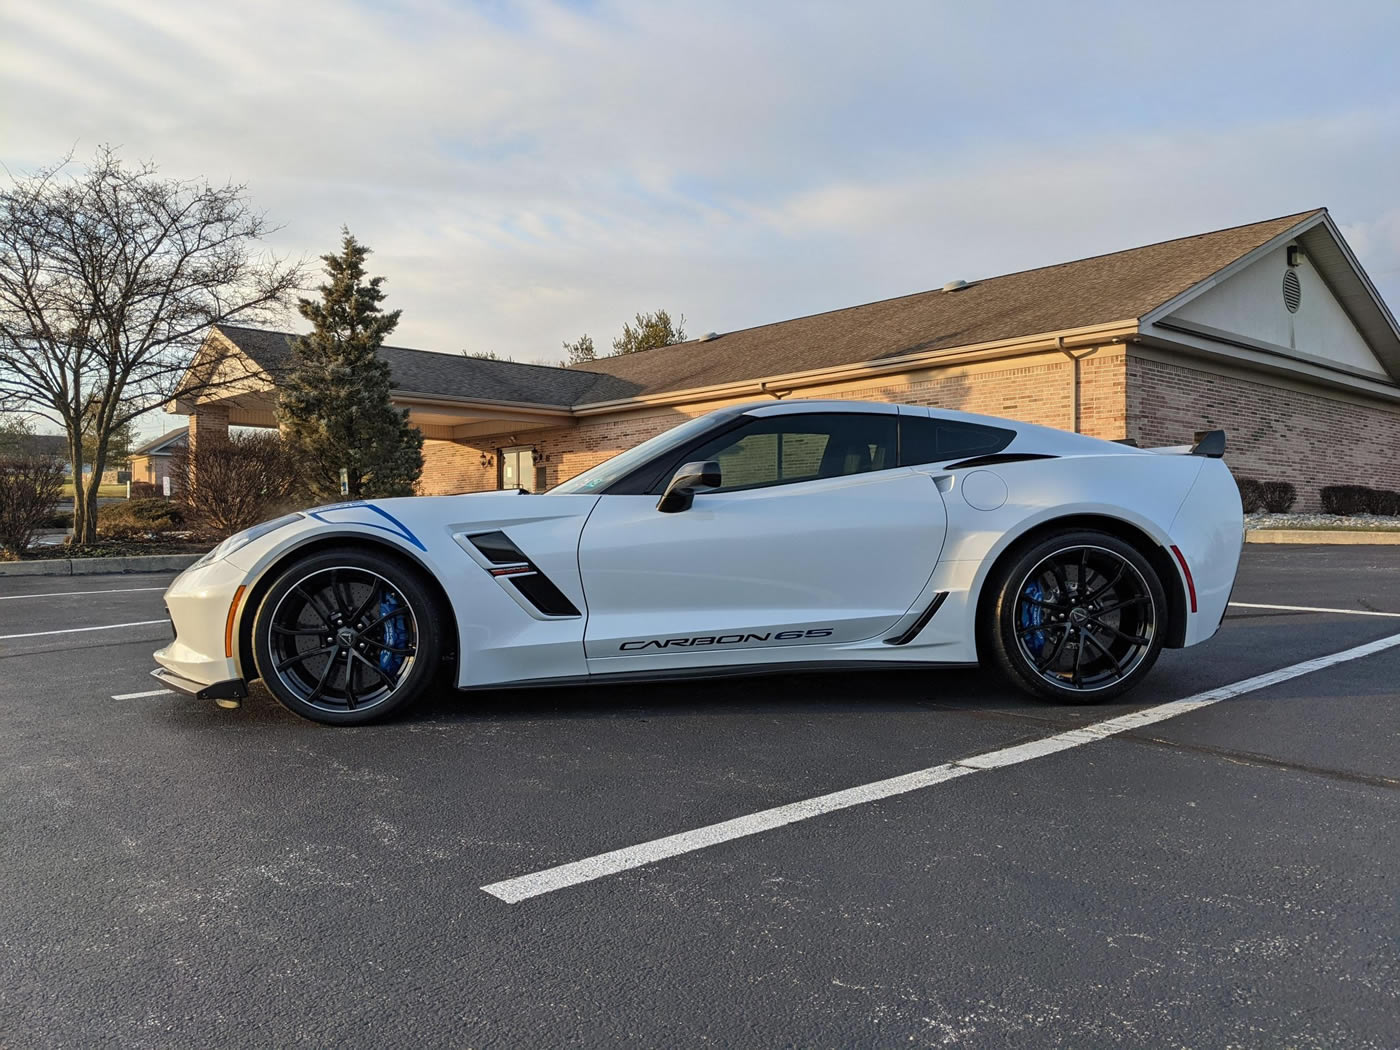 2018 Corvette Grand Sport Carbon 65 Edition